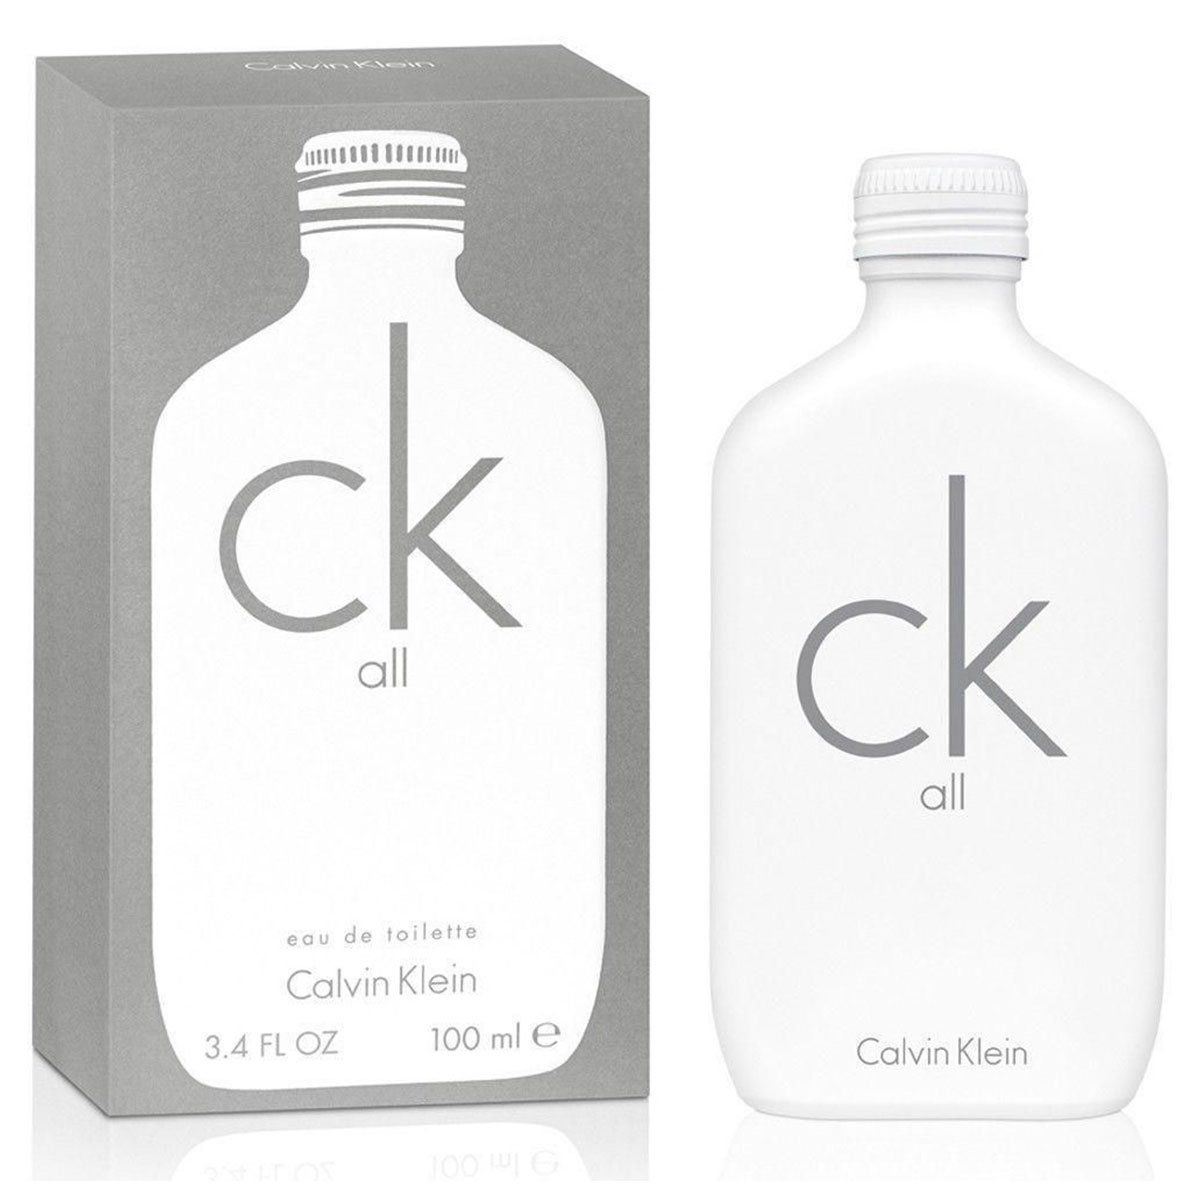  Calvin Klein CK All 